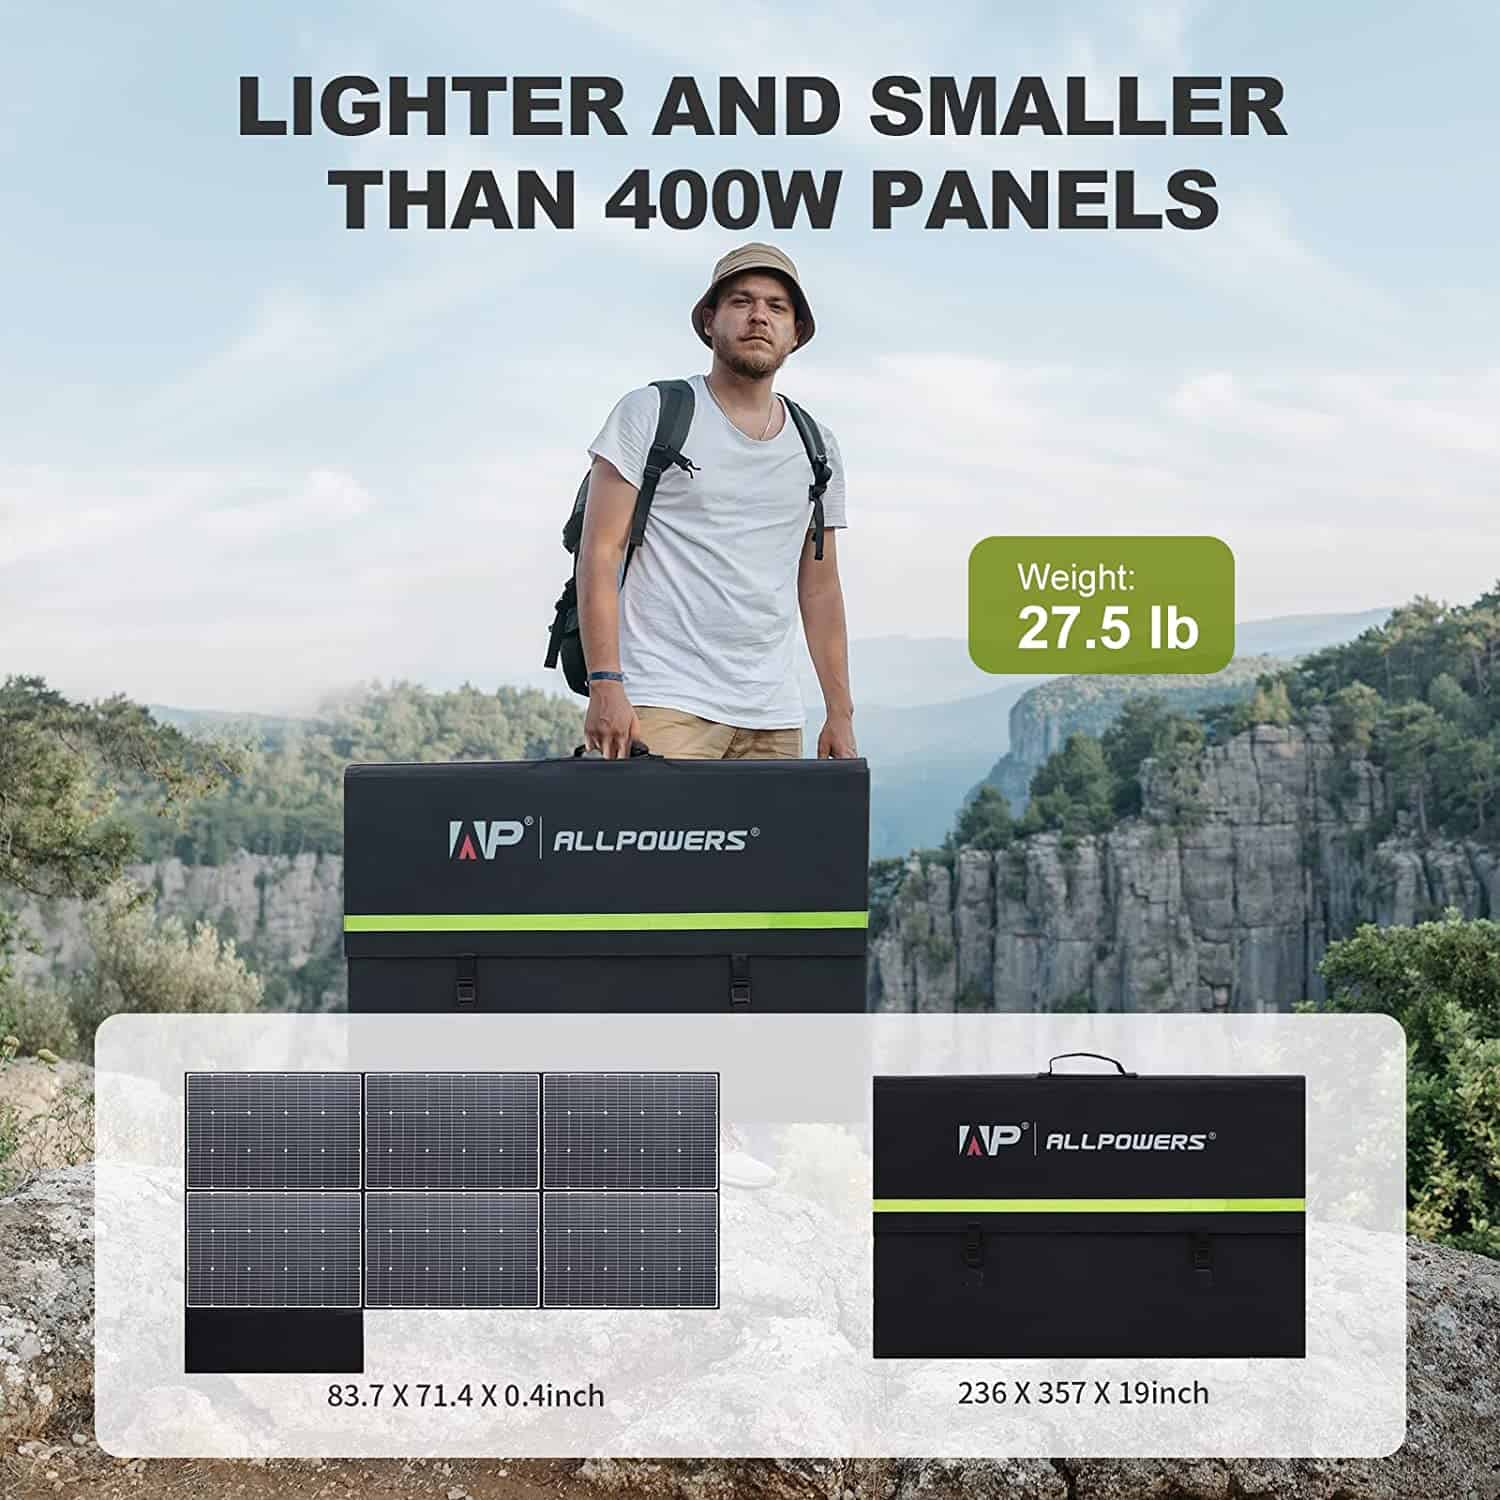 ALLPOWERS SP039 600W Monocrystalline Portable Solar Panel Review